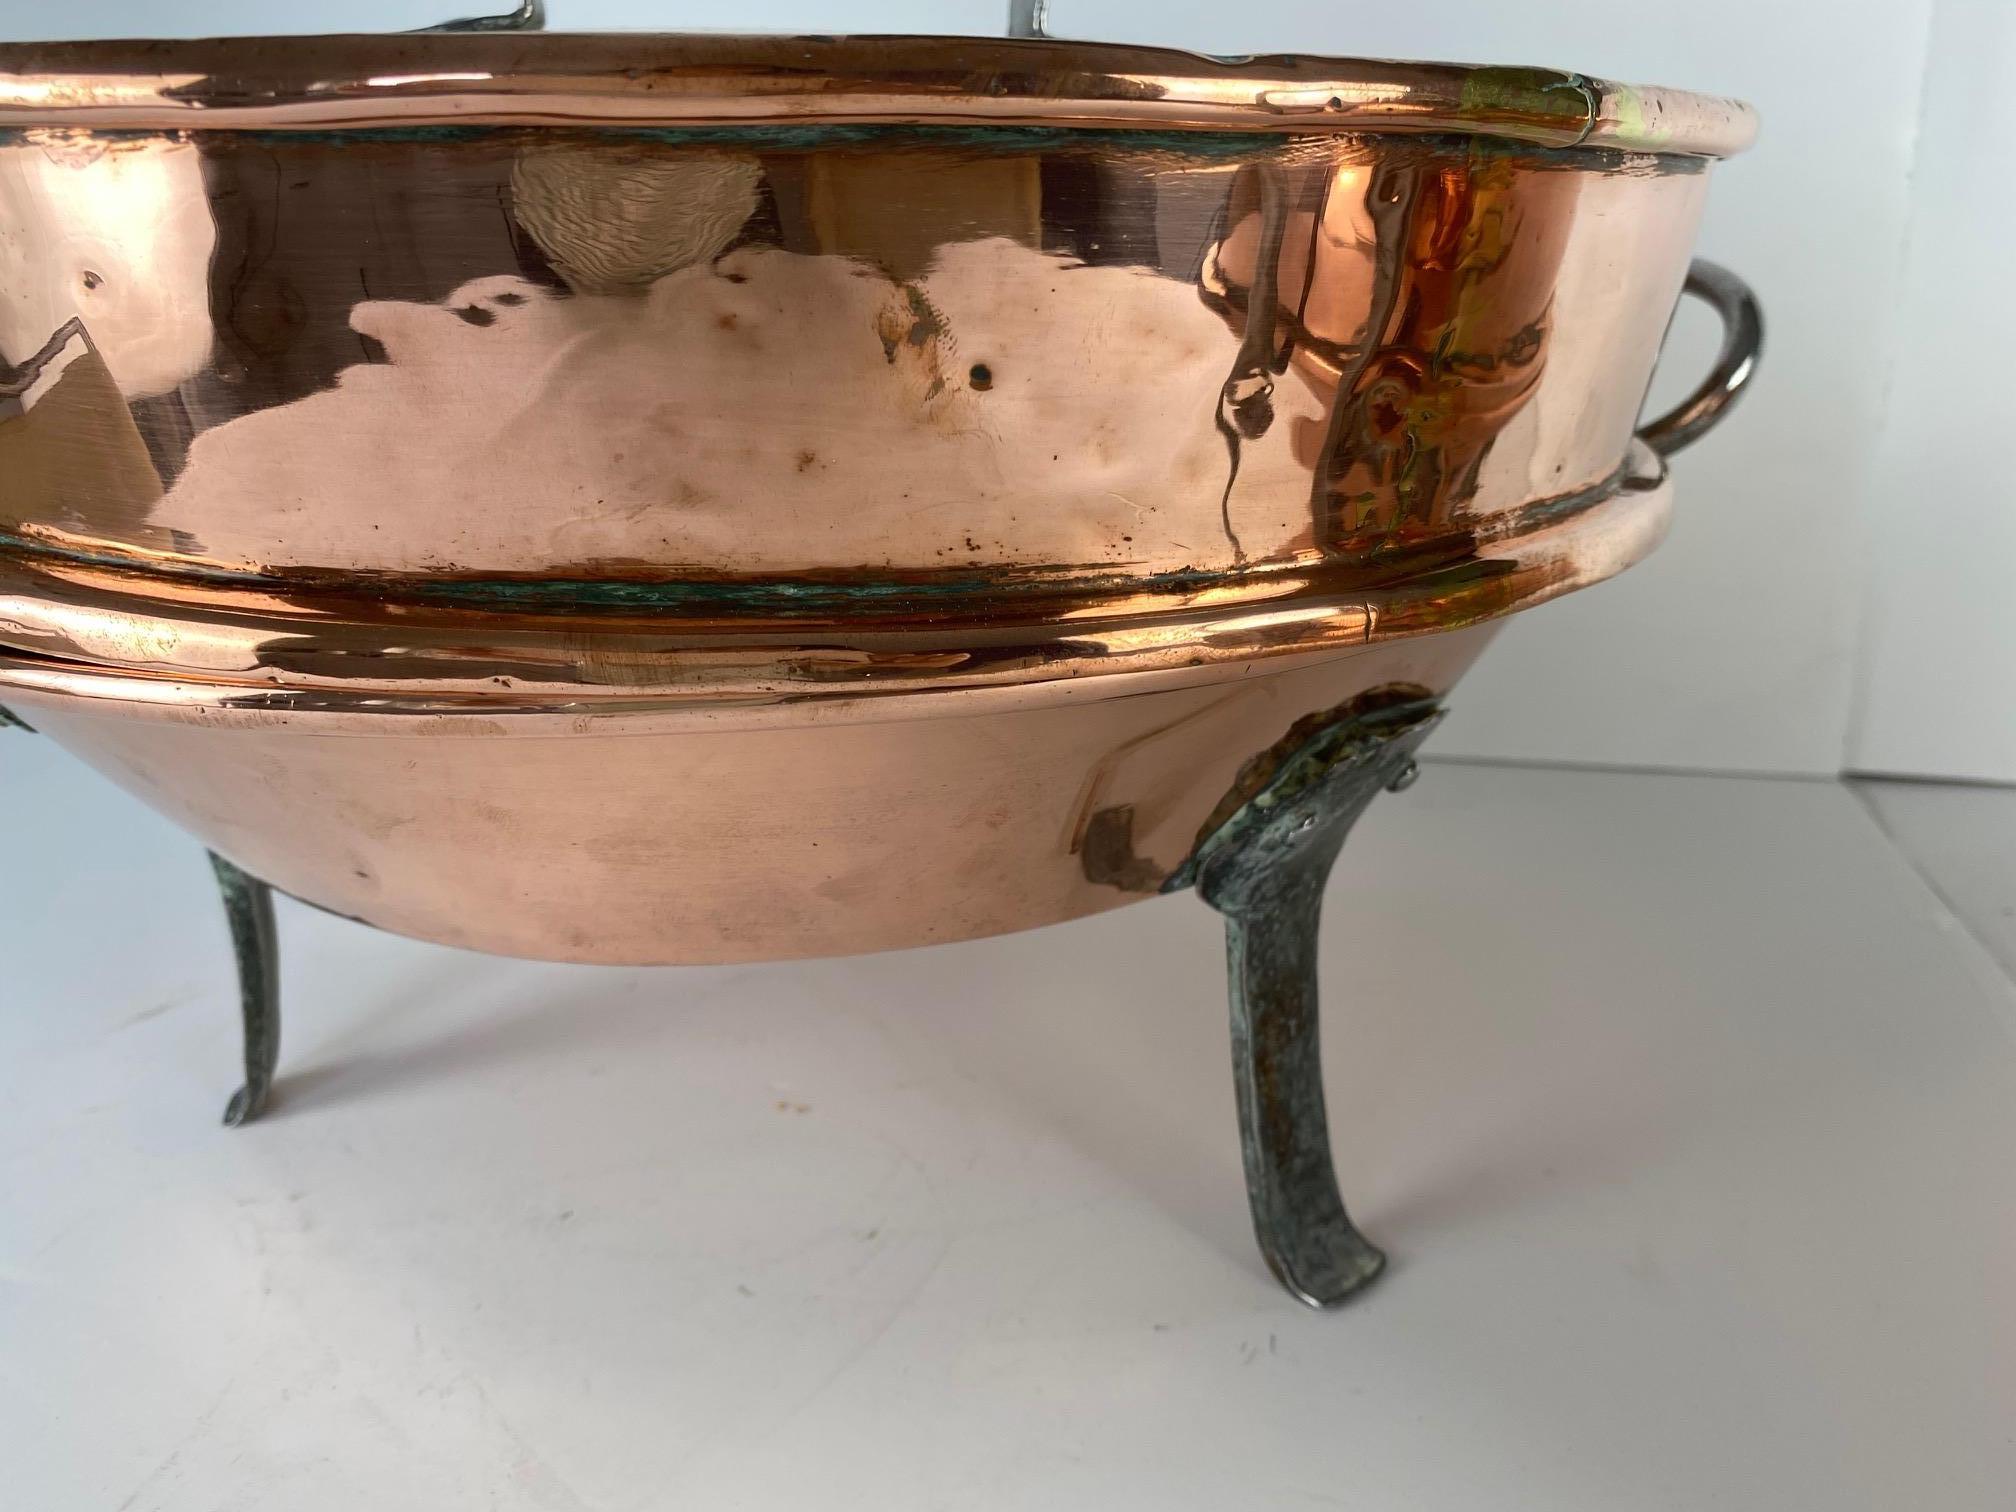 18th century large copper tourtiere or pie pots with lids.Measures: Large Size 17